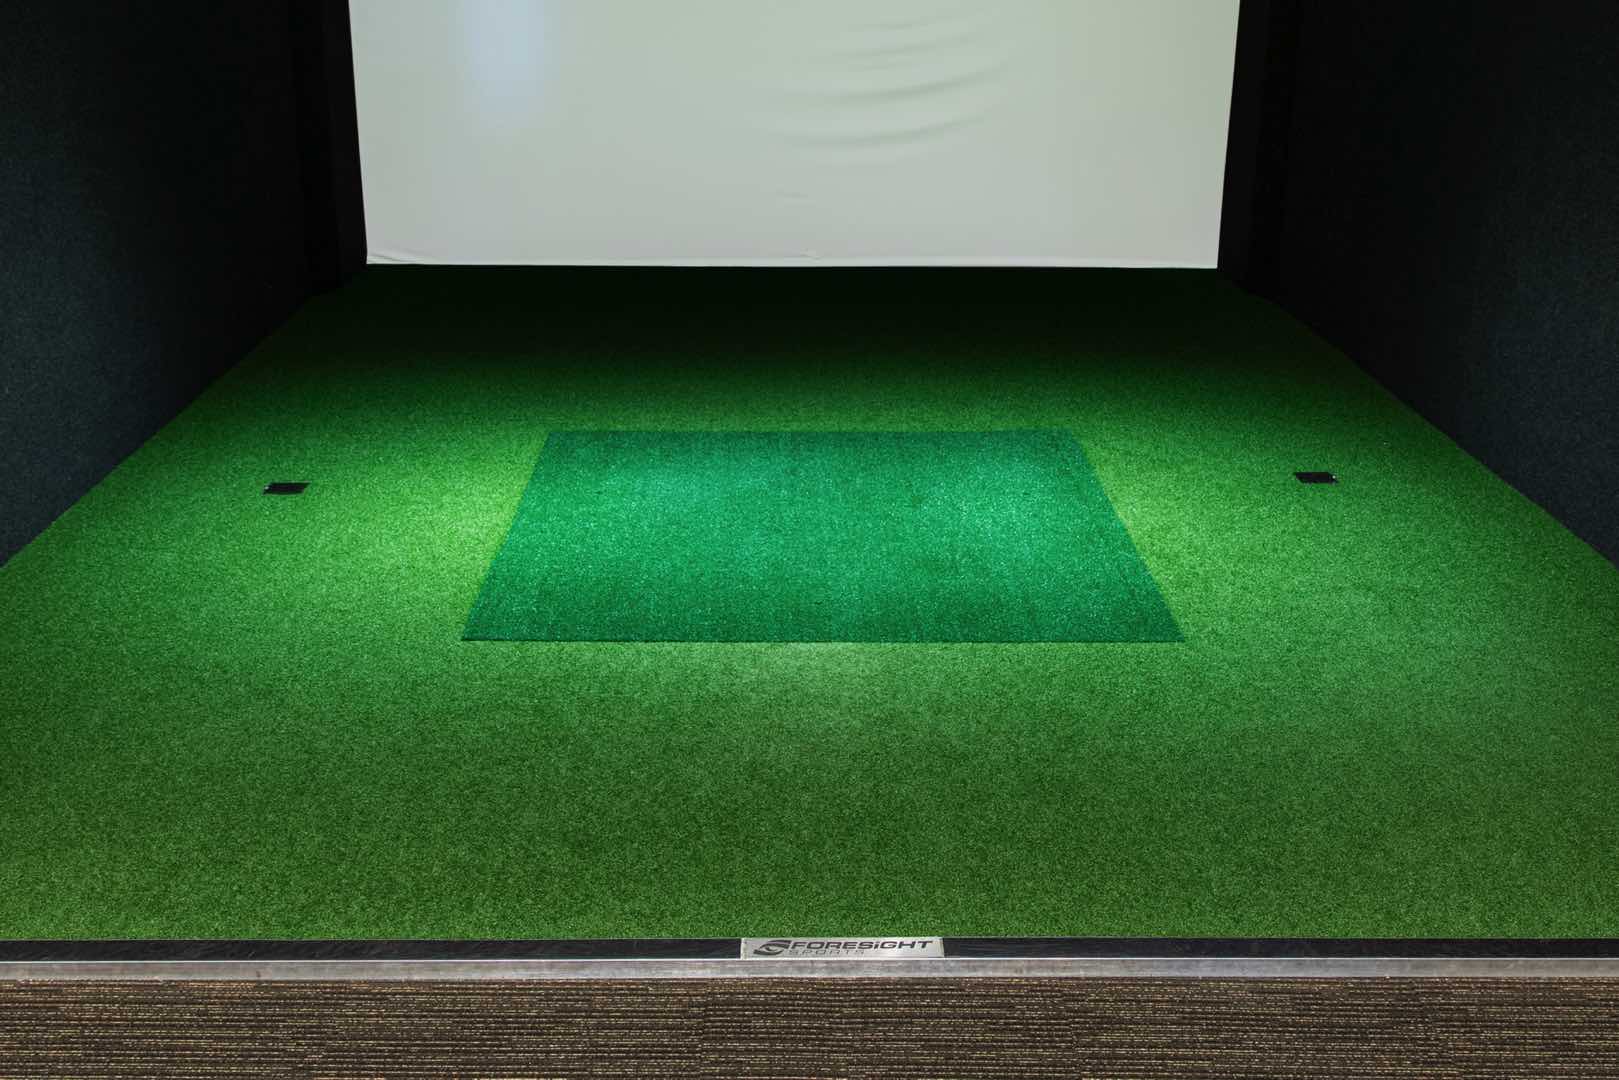 Golf simulator flooring and artificial turf